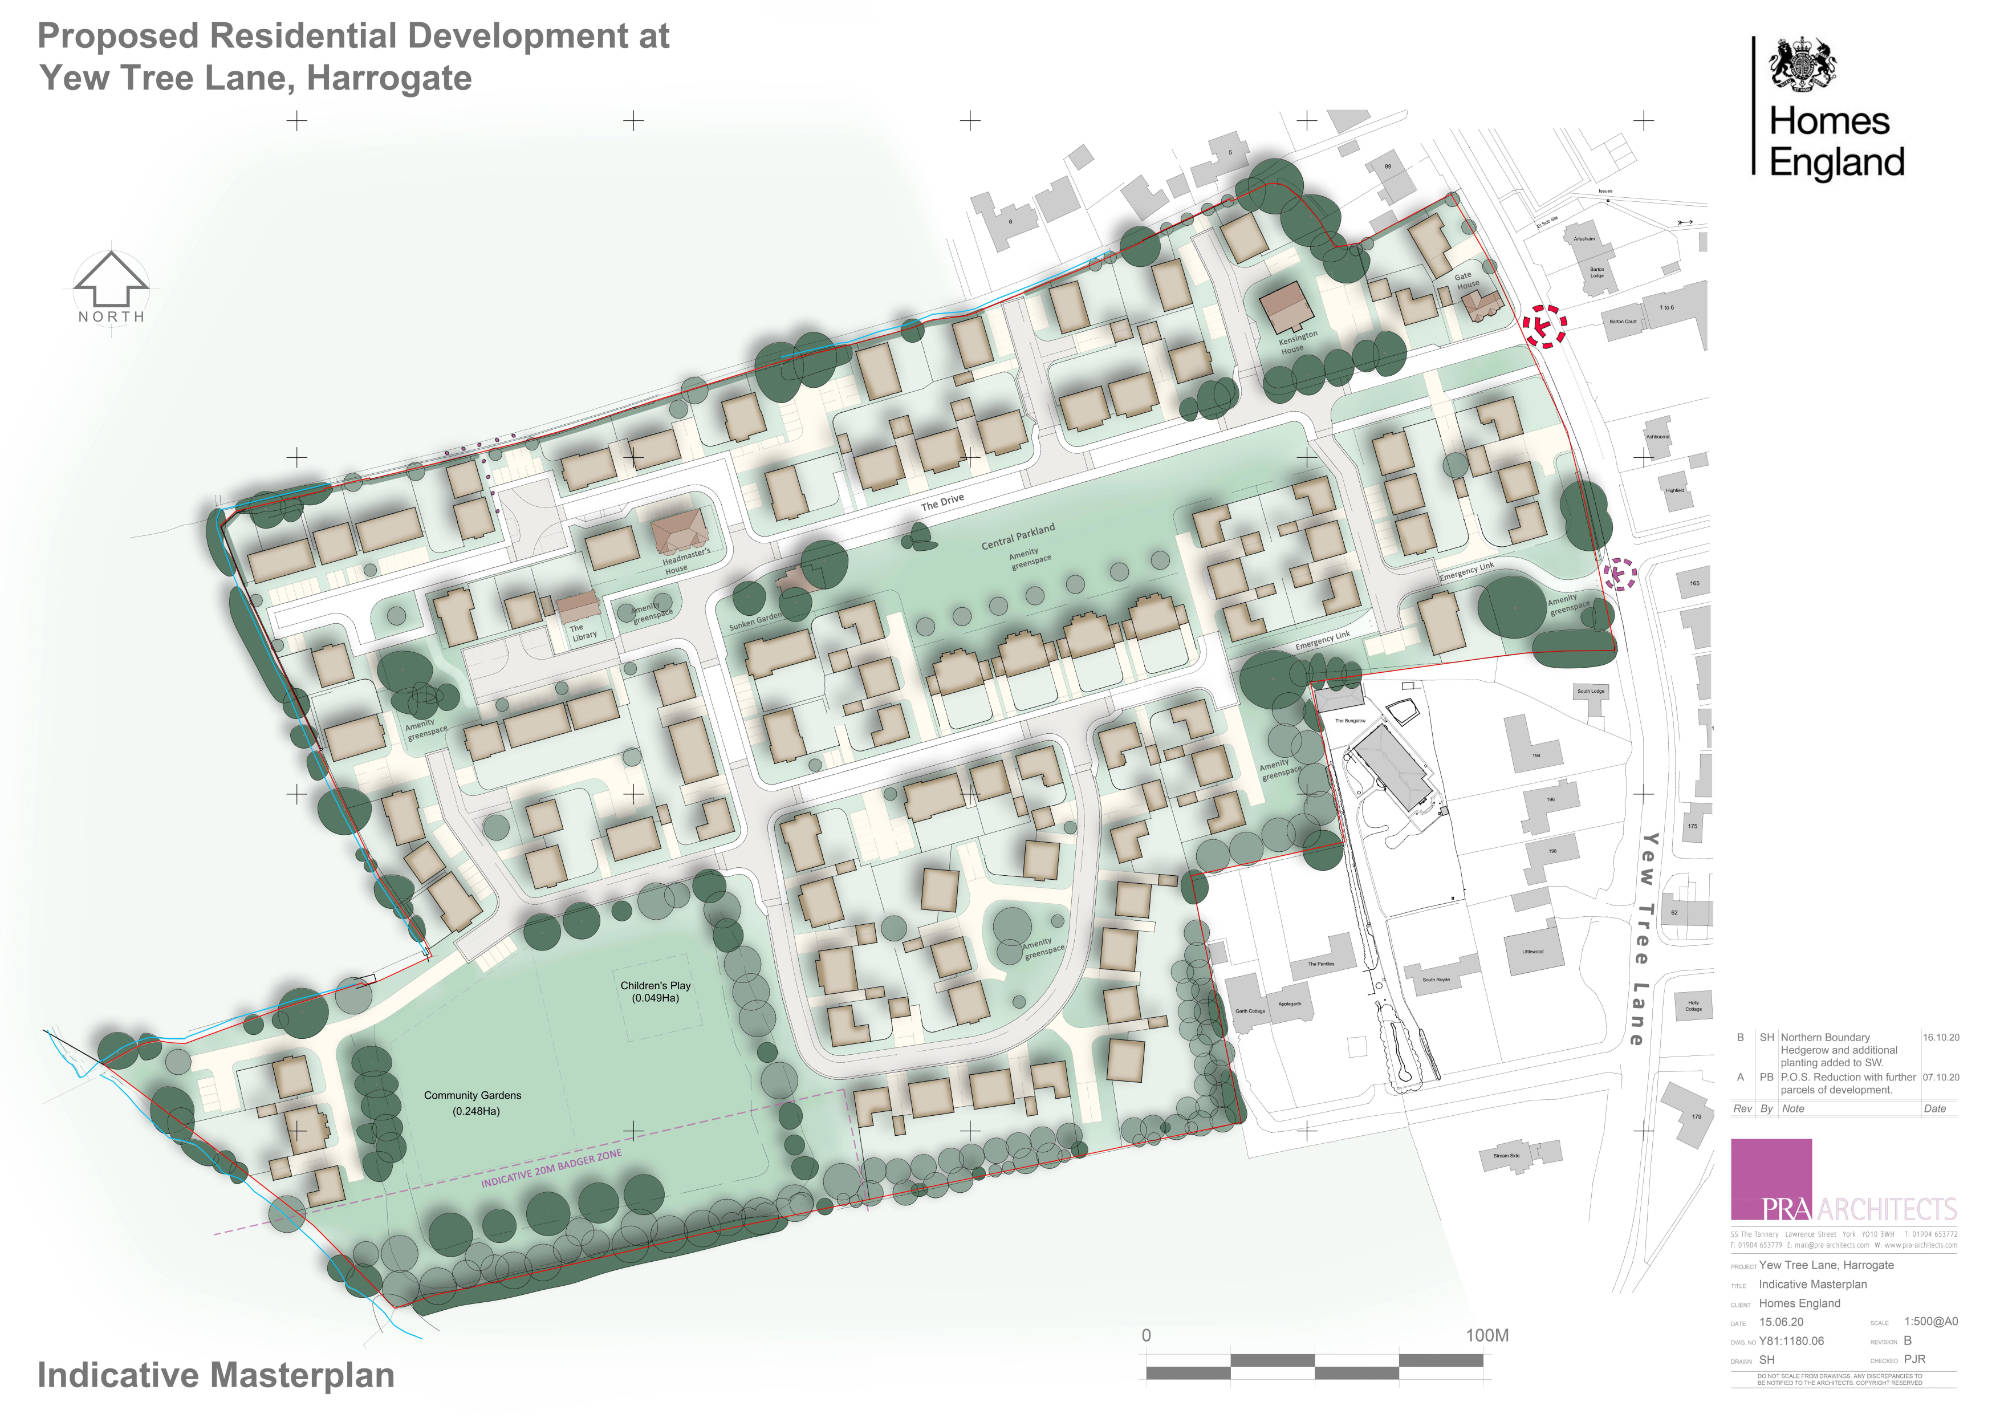 200 new homes planned for Harrogate on former police training centre